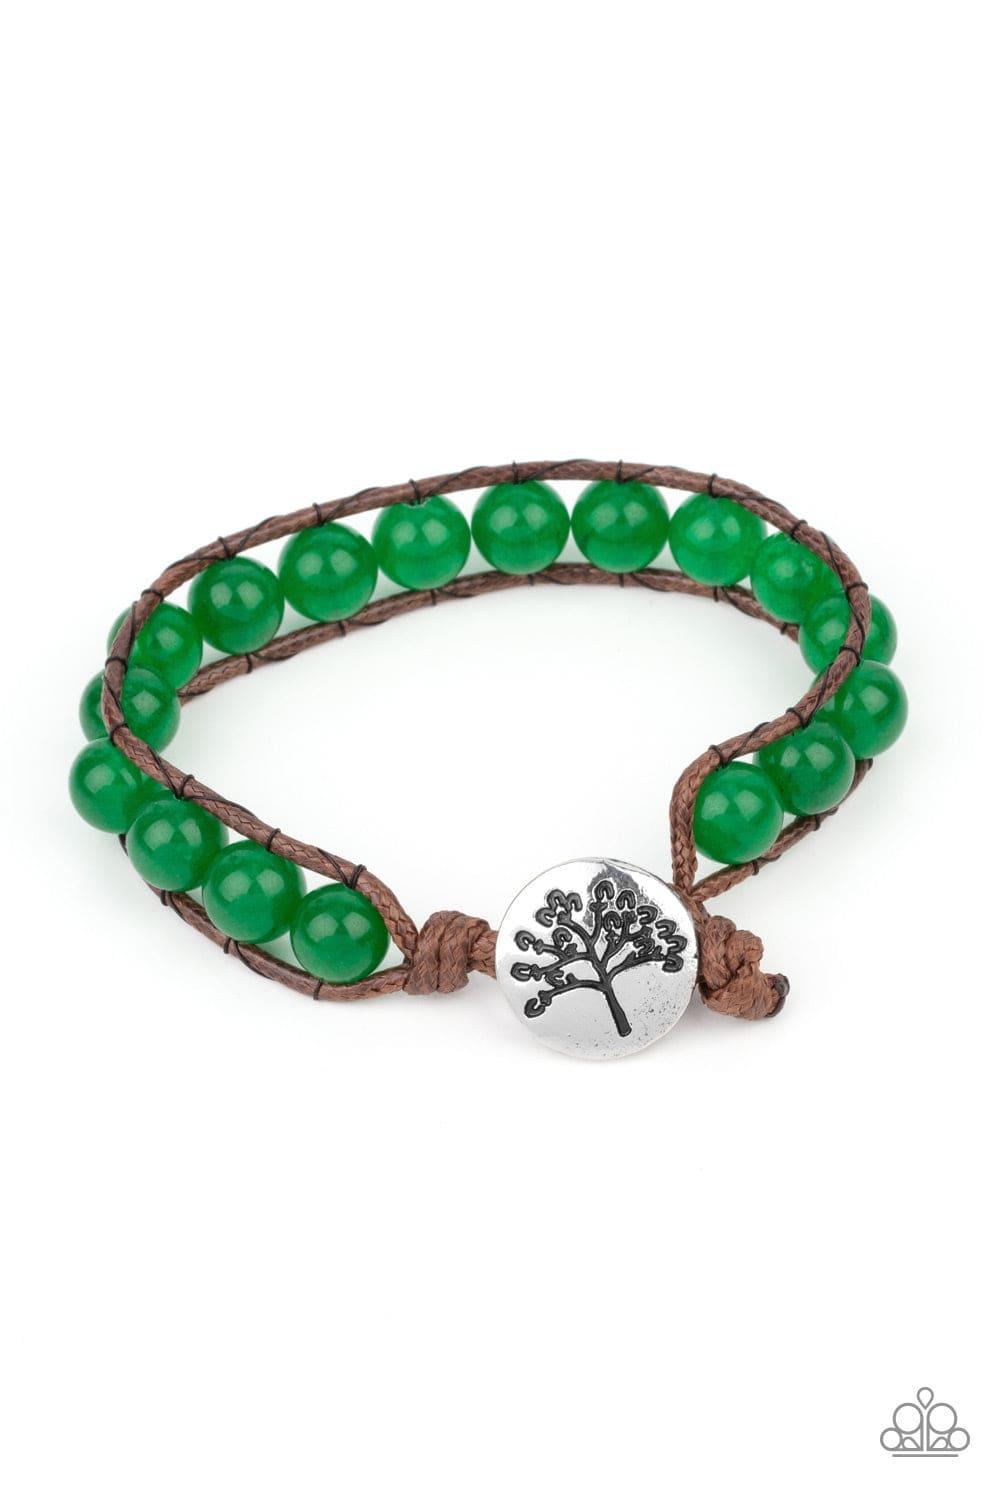 Paparazzi Accessories - Seasonal Bounty - Green Urban Bracelet - Bling by JessieK